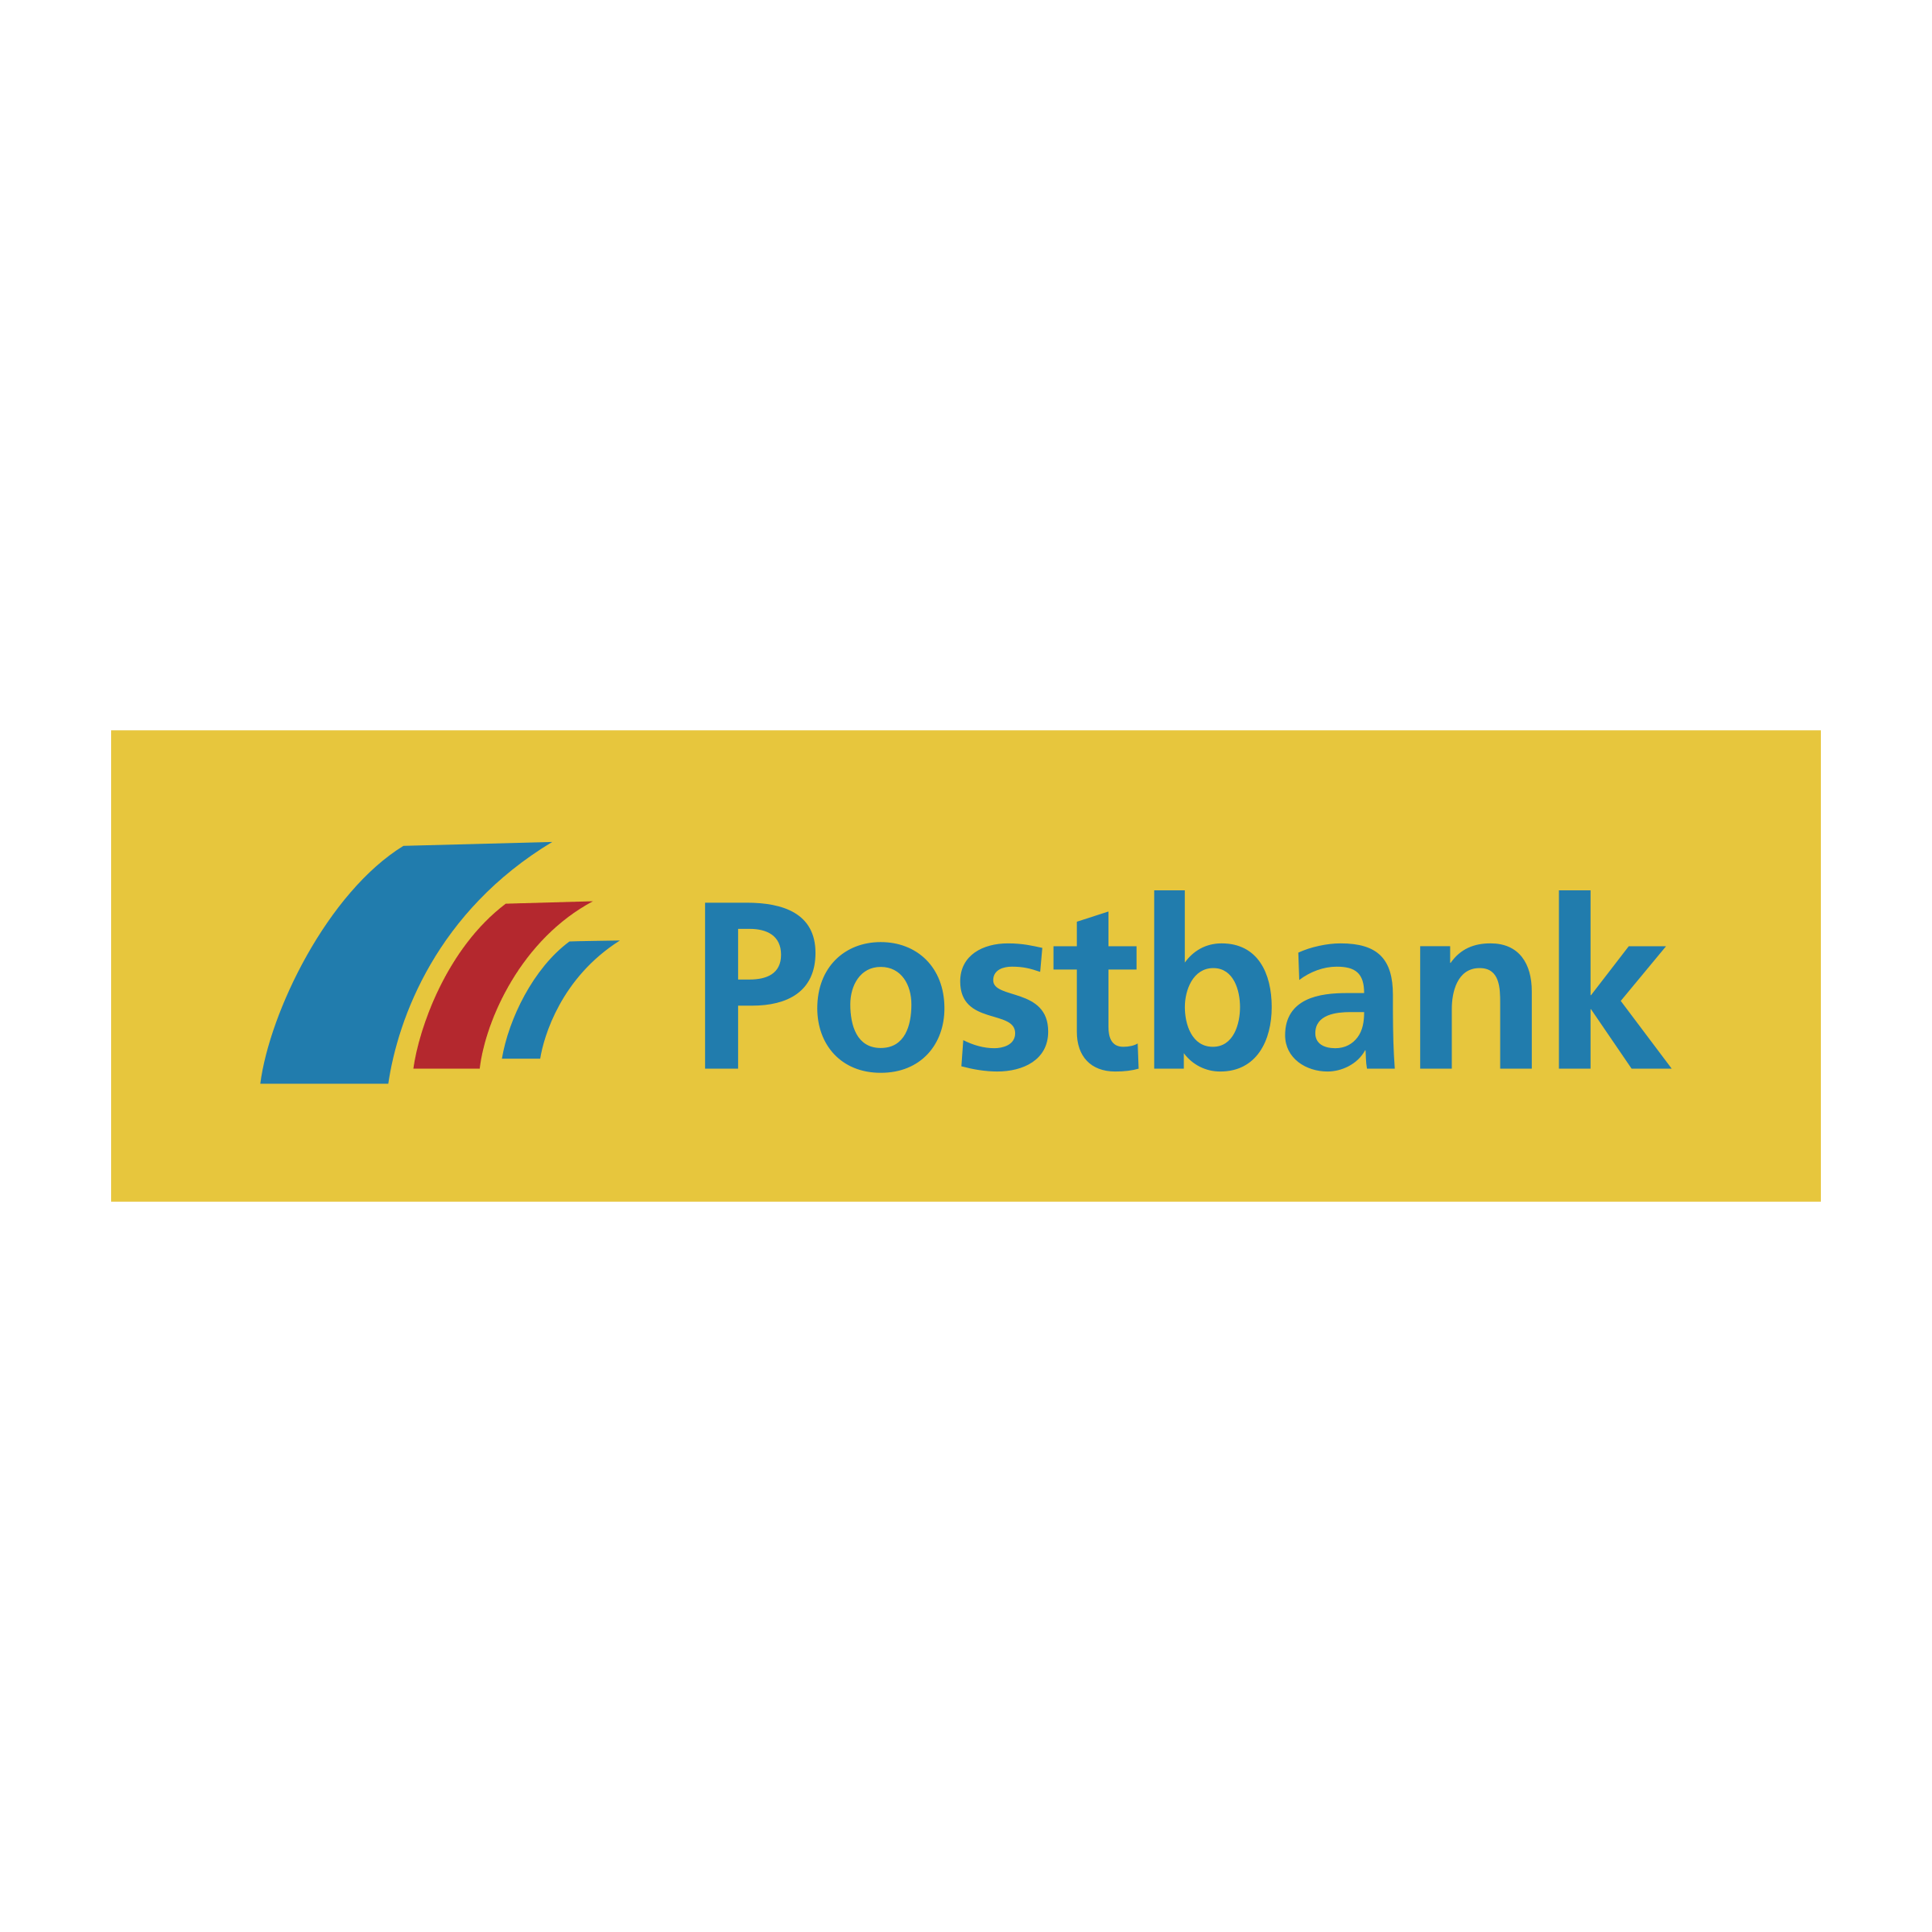 Postbank Logo - Postbank Logo PNG Transparent & SVG Vector